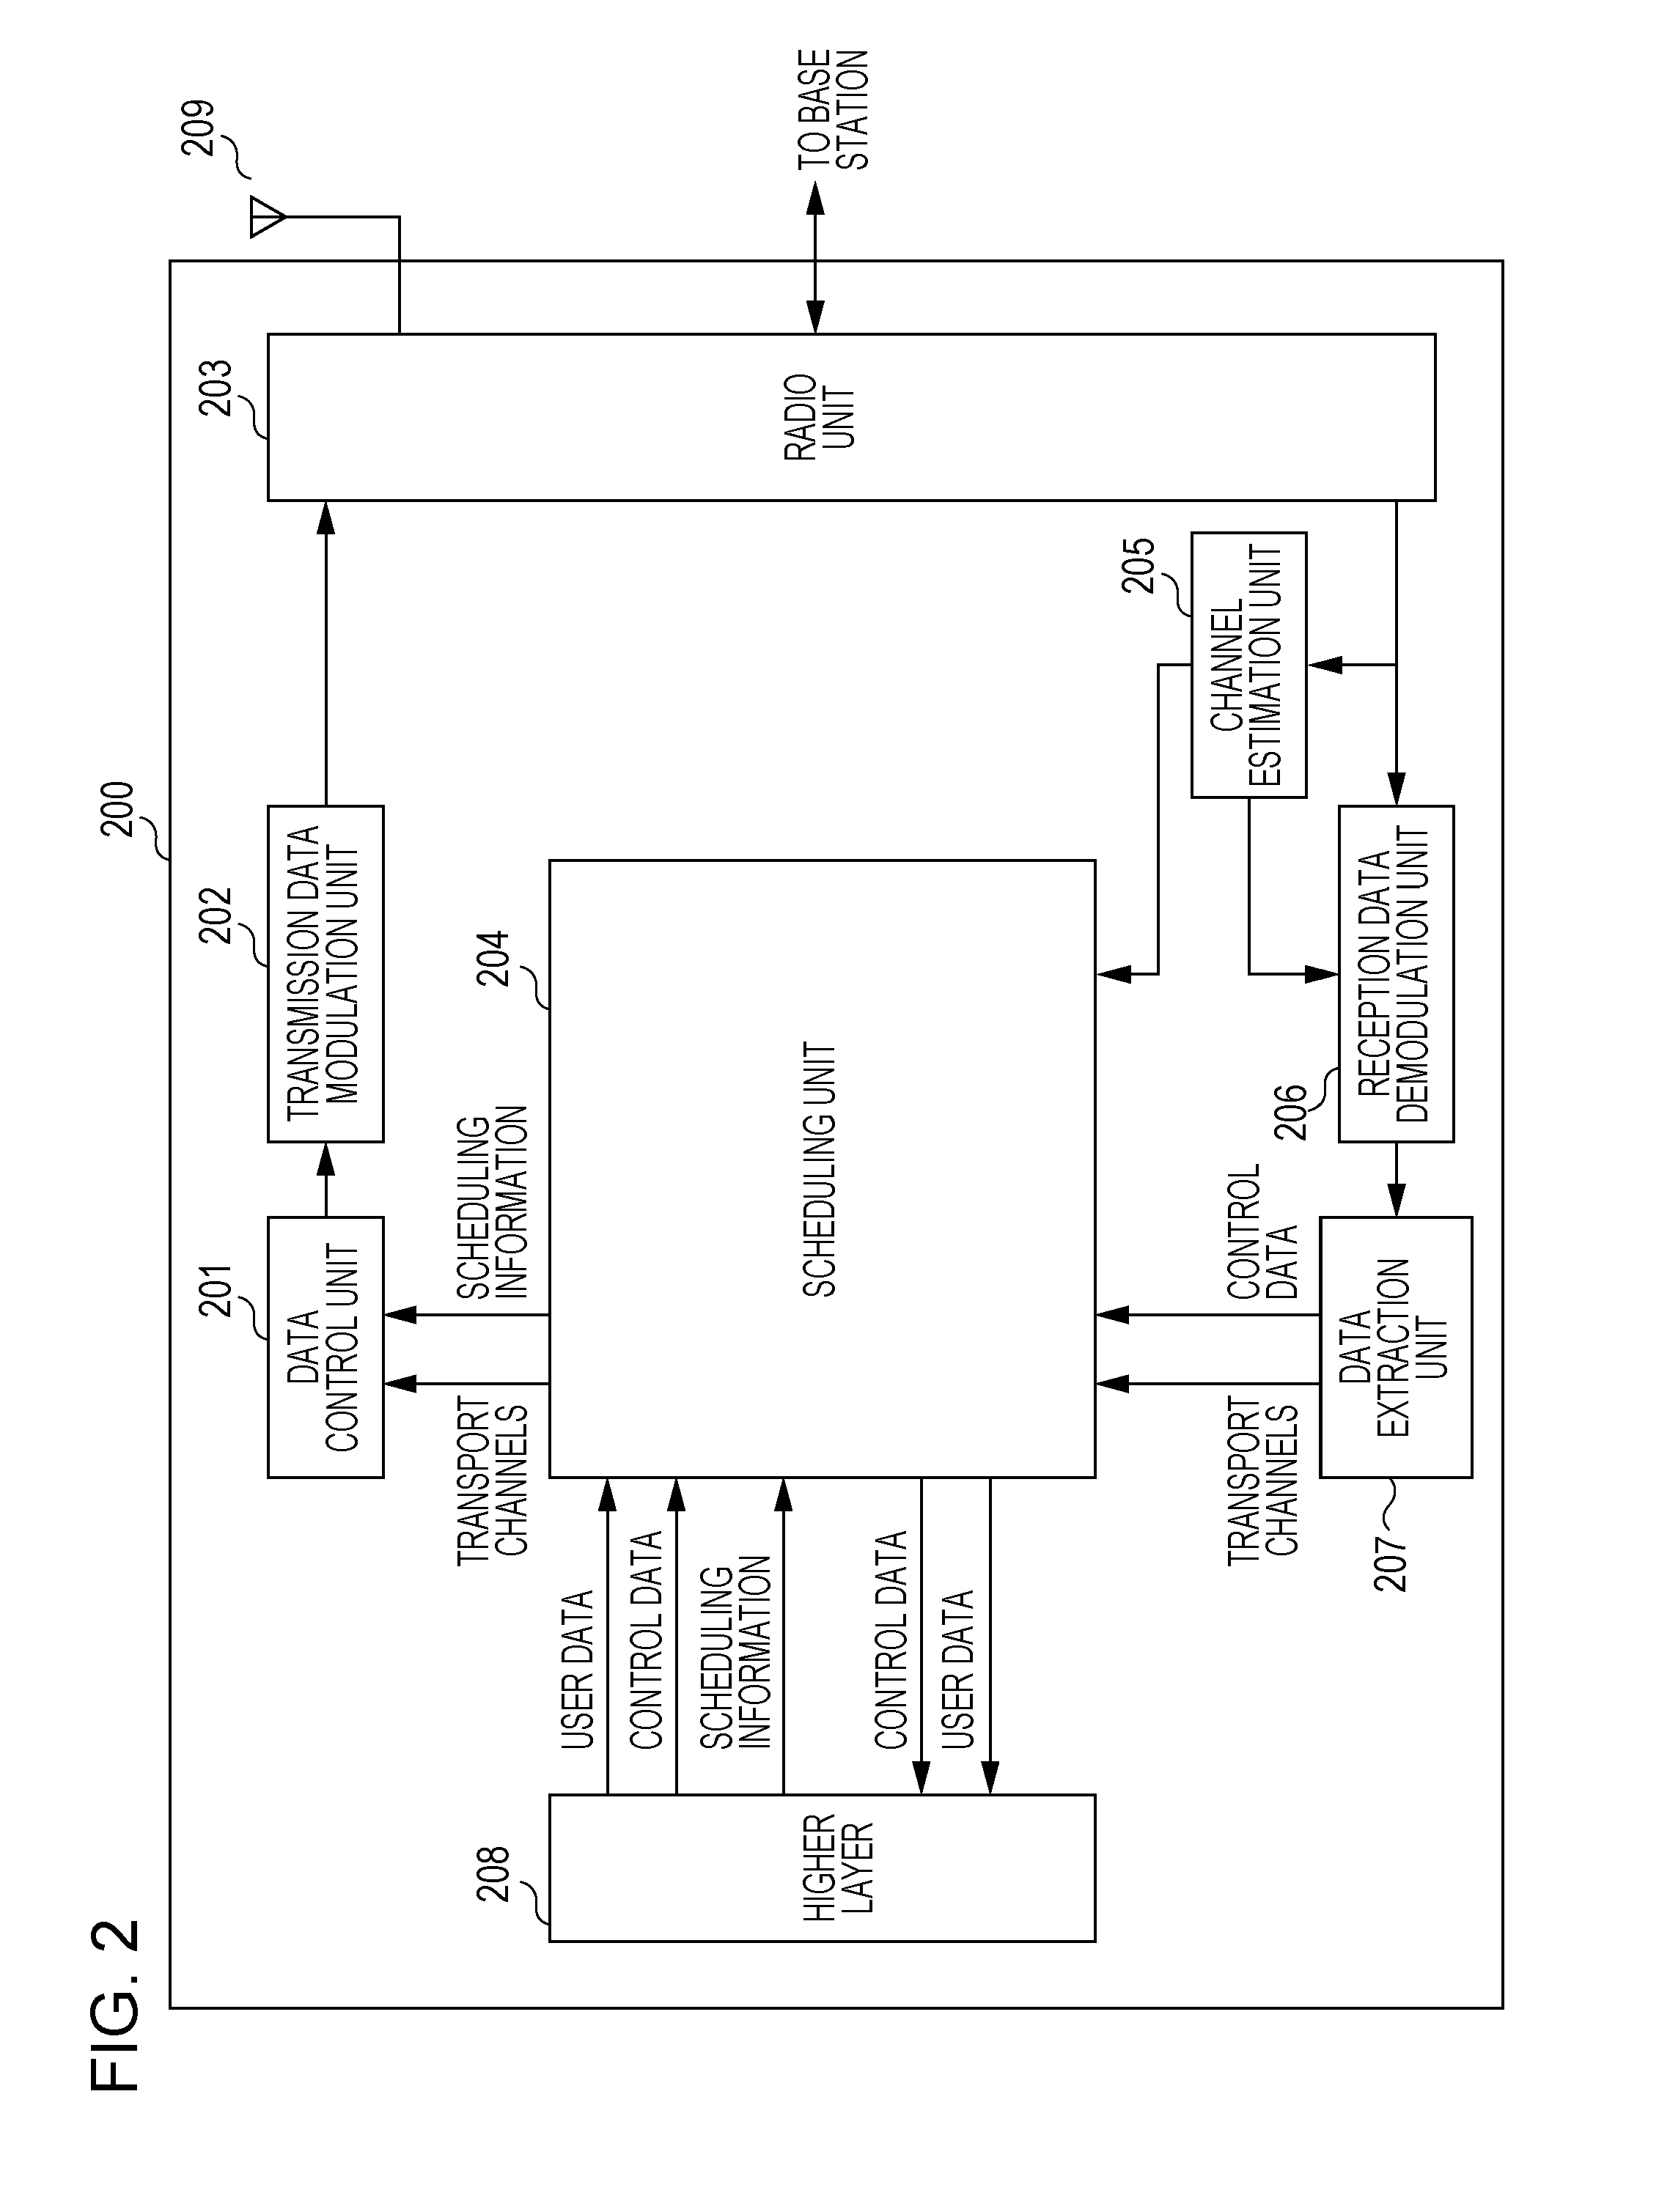 Terminal apparatus, base station apparatus, and integrated circuit